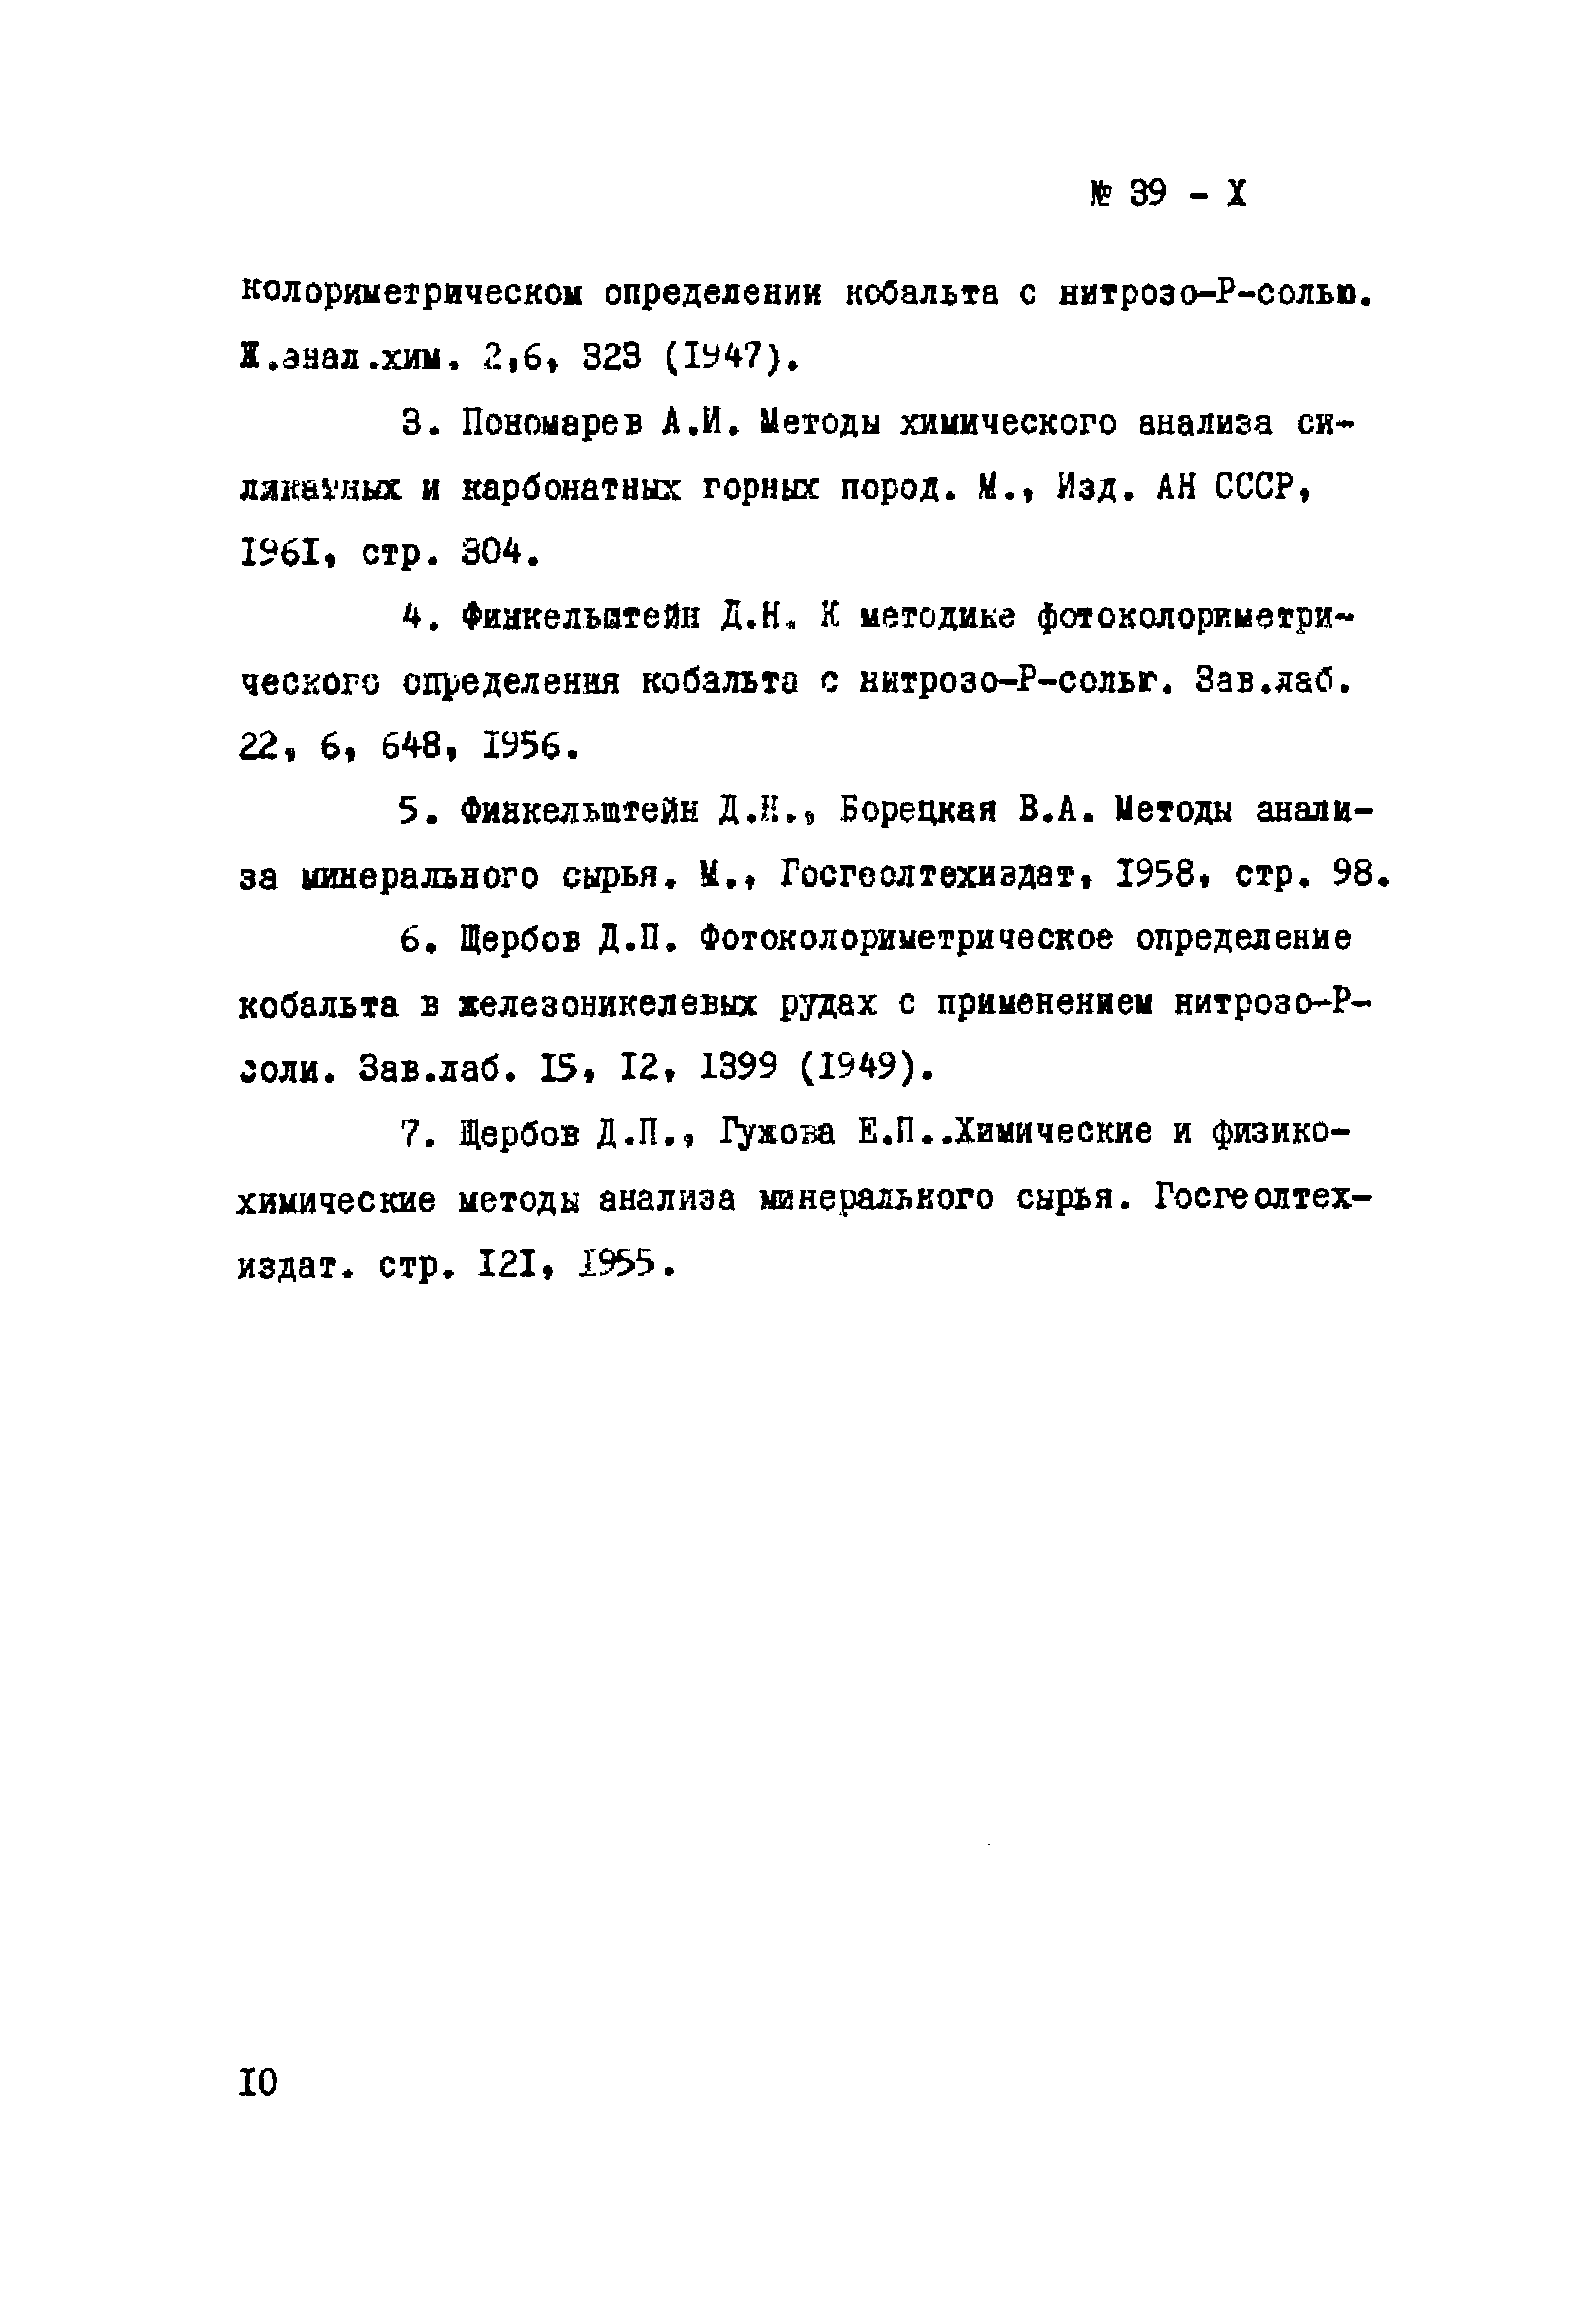 Инструкция НСАМ 39-Х